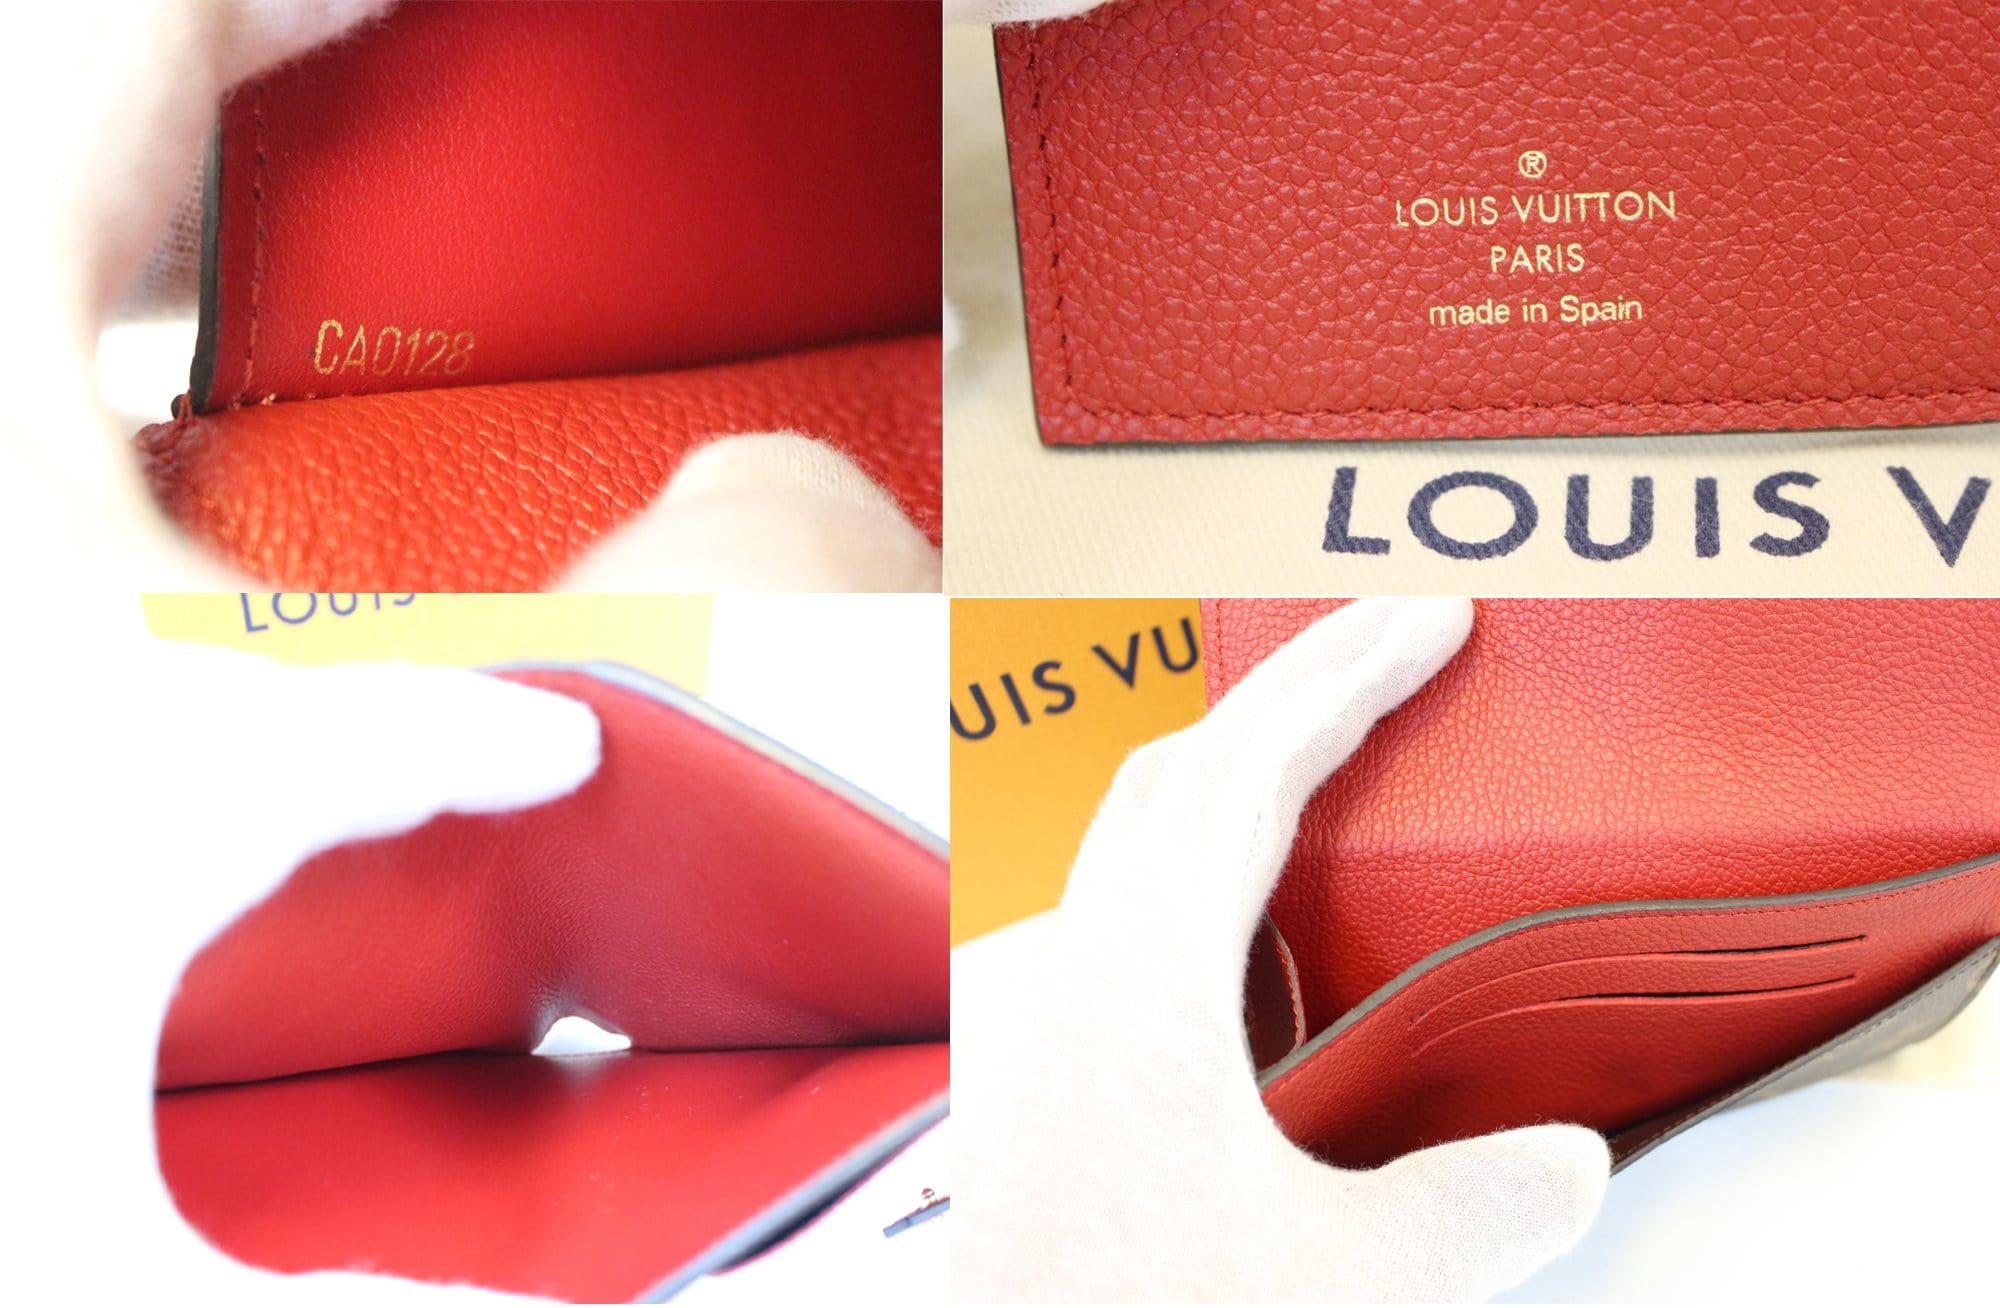 Louis Vuitton Pallas Compact Wallet  Louis vuitton pallas, Wallet, Vuitton